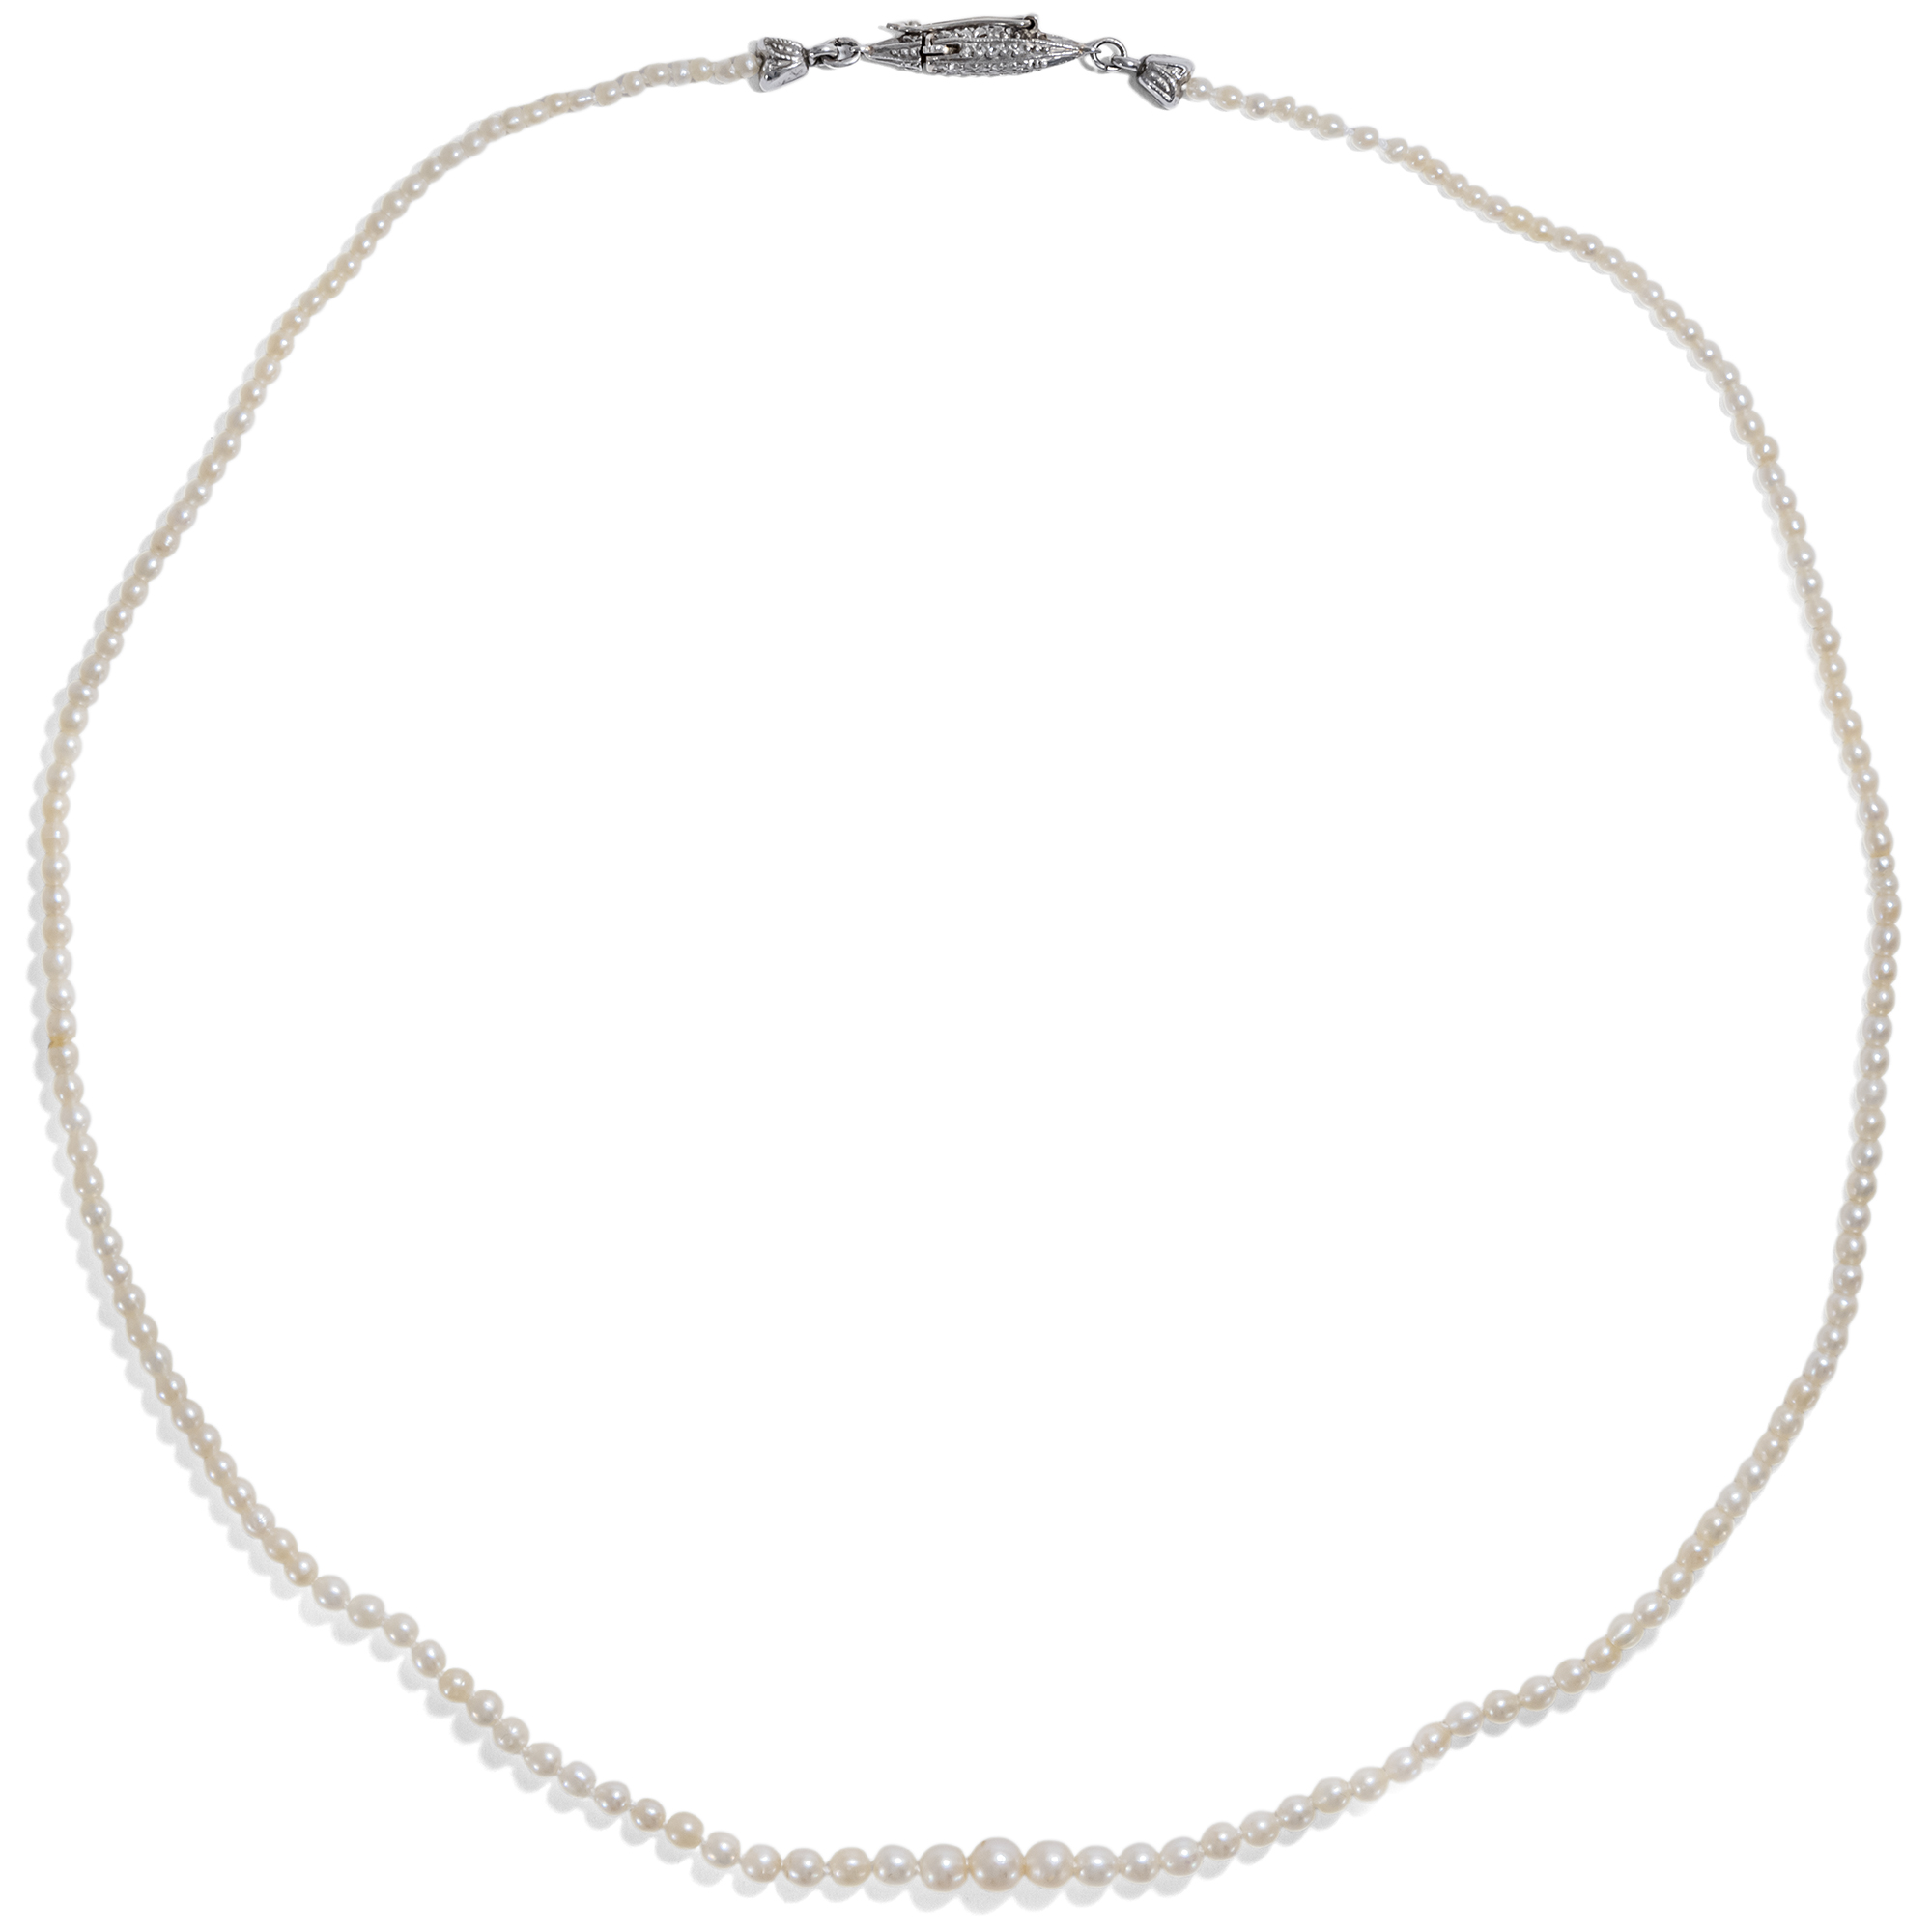 Antique Natural Pearl Choker Length Necklace, circa 1915